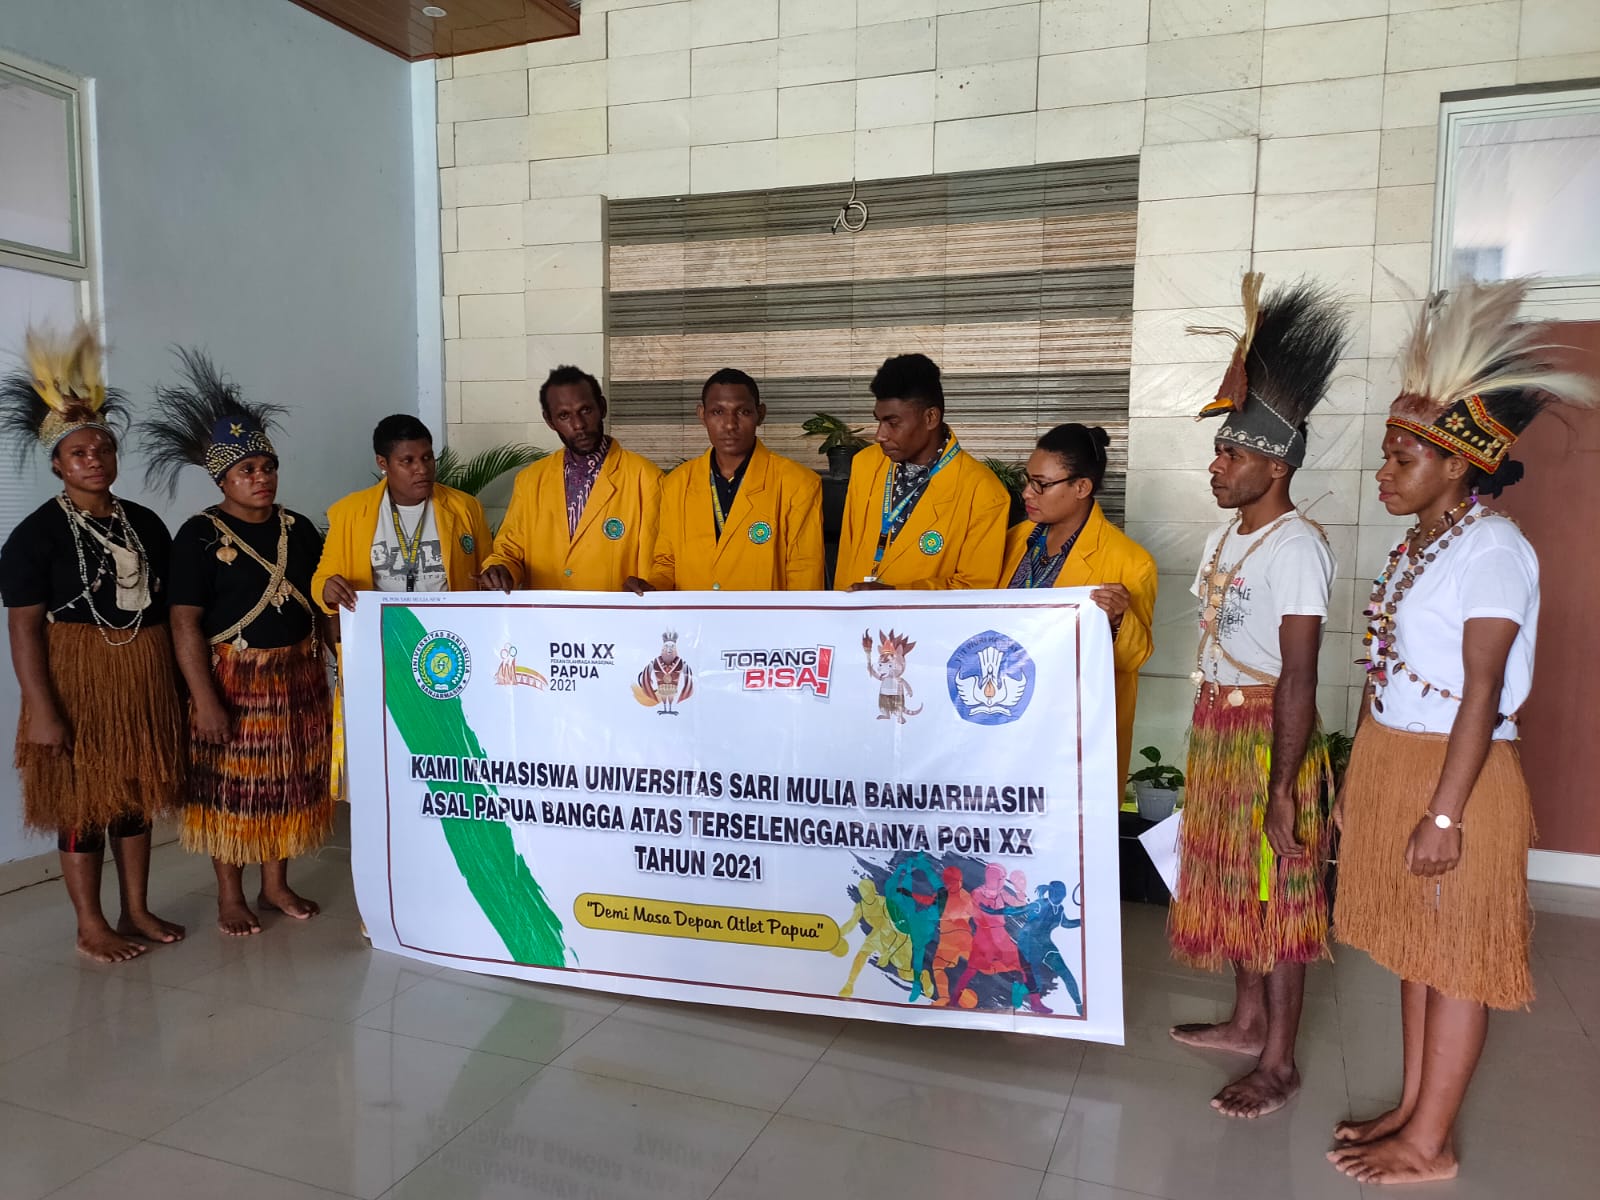 Mahasiswa Unism Banjarmasin Asal Papua Dukung Suksesnya PON XX